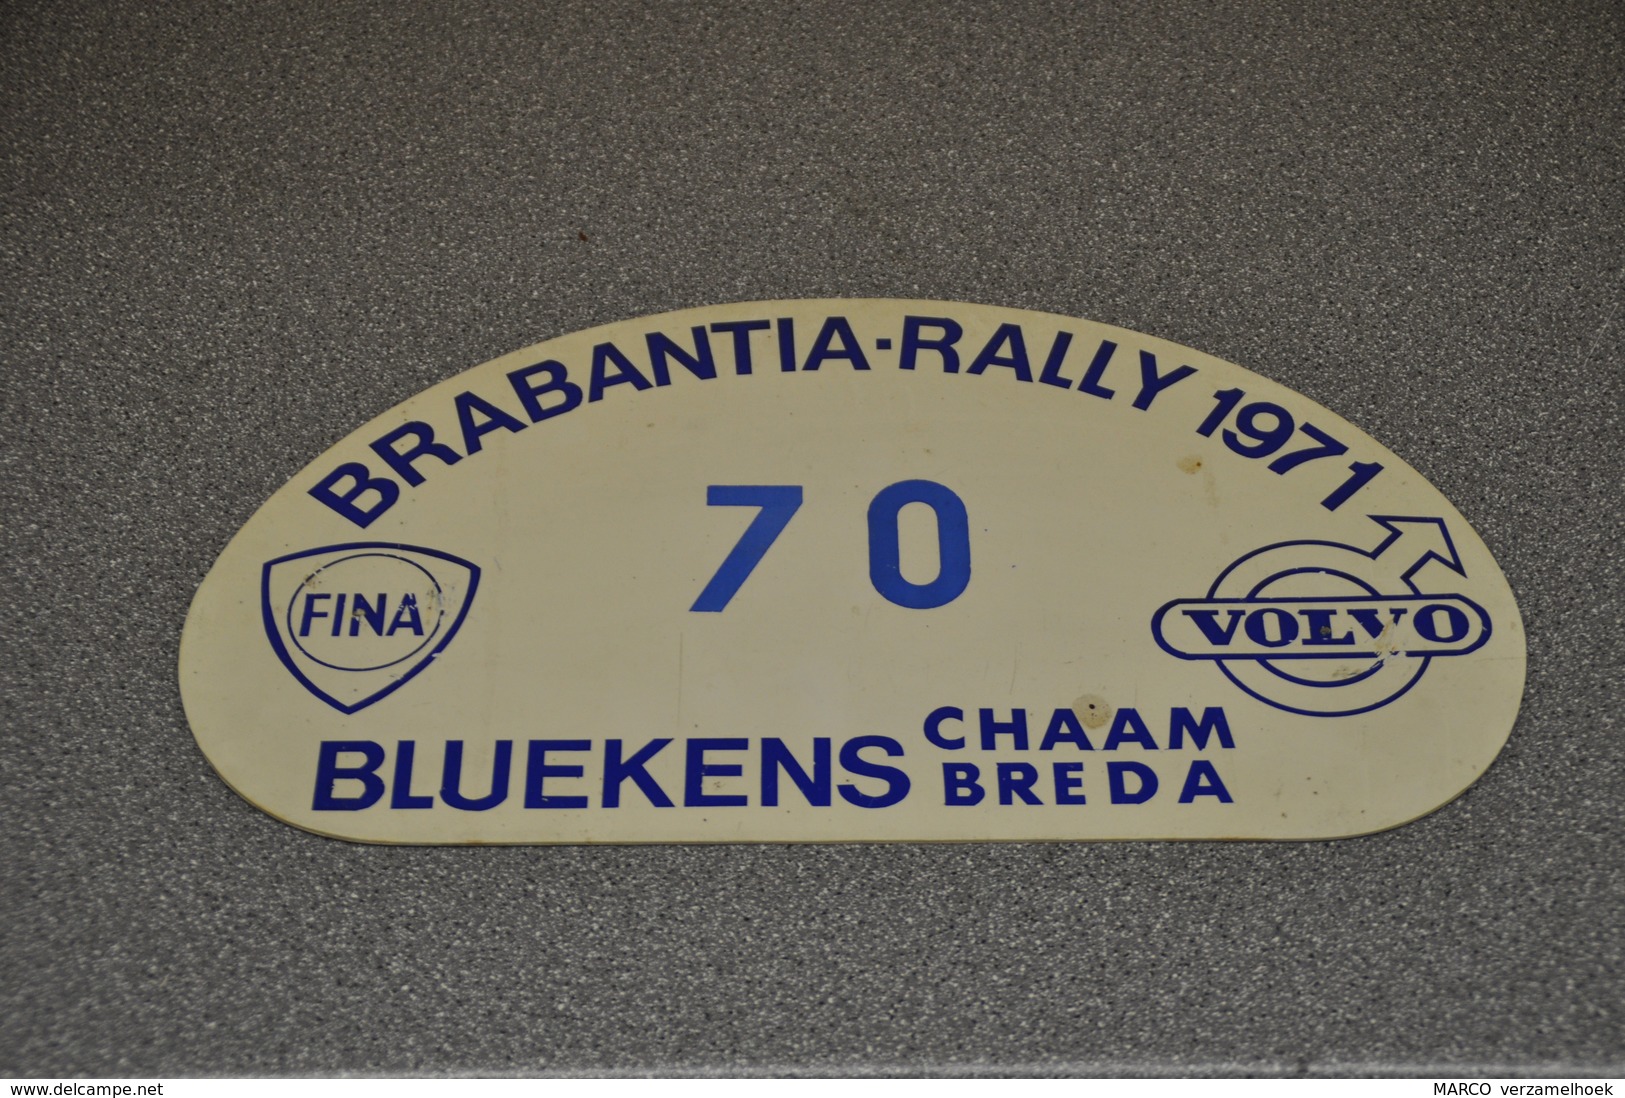 Rally Plaat-rallye Plaque Plastic: Brabantia Rally 1971 Bluekens Chaam-breda Volvo Fina - Rally-affiches